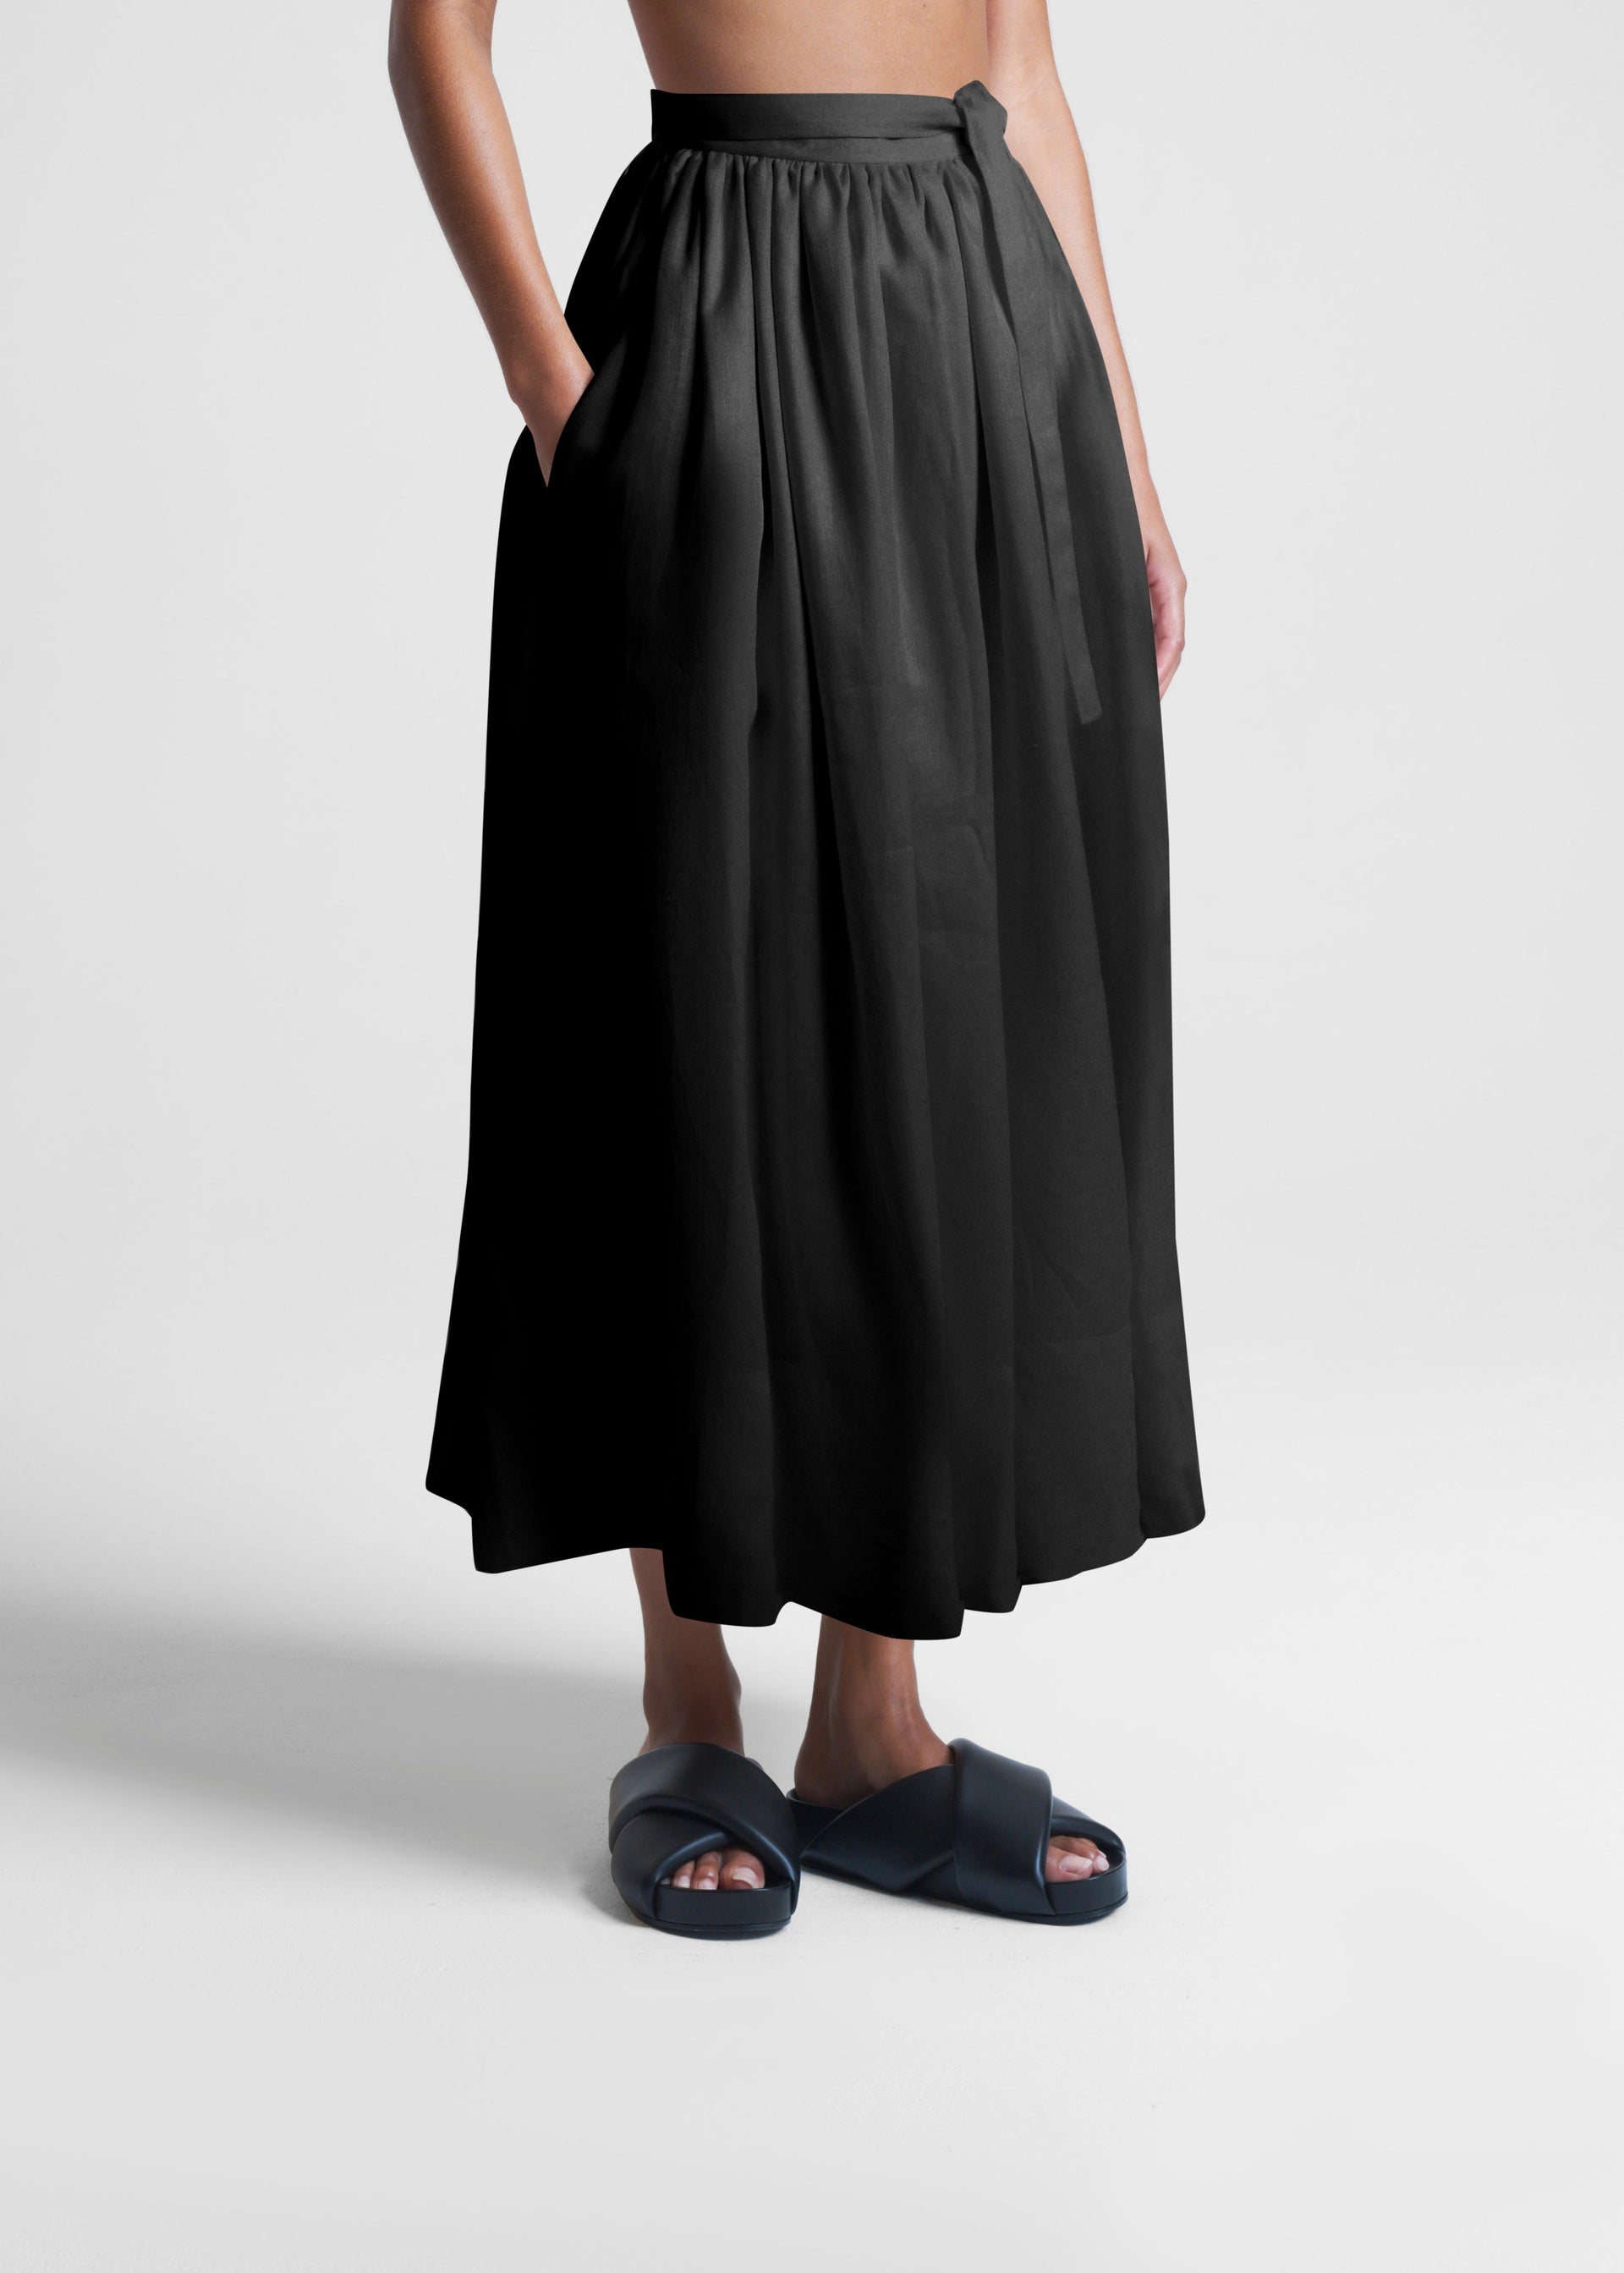 Coco Black Heavy Linen Skirt